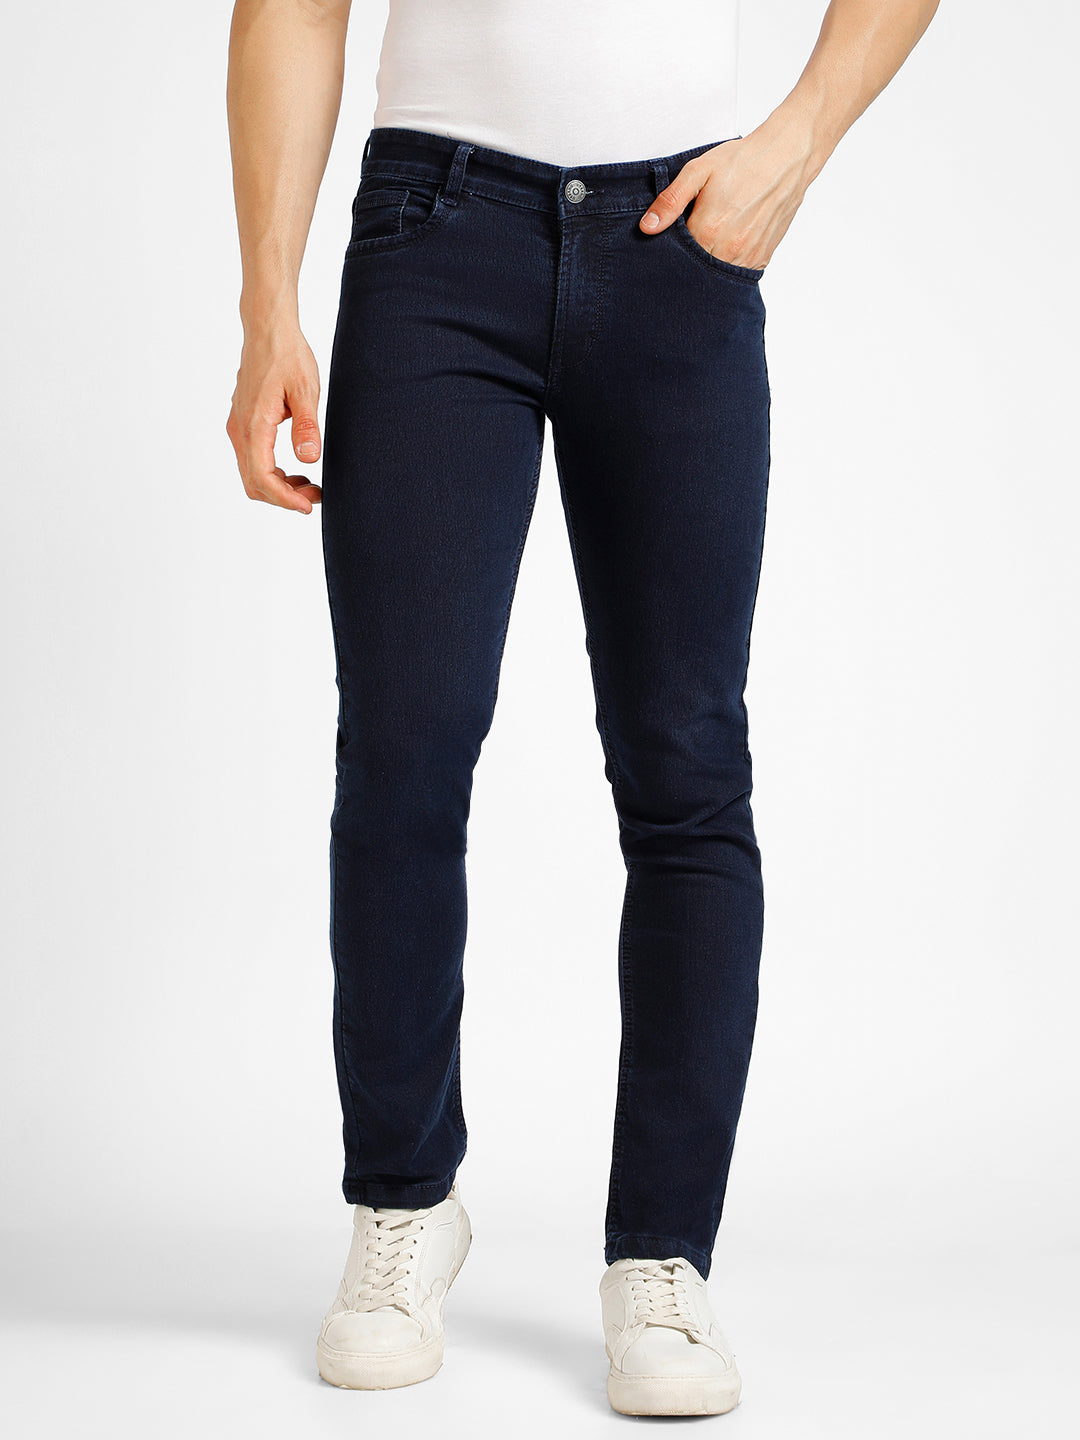 Men's Navy Blue Slim Fit Washed Jeans Stretchable